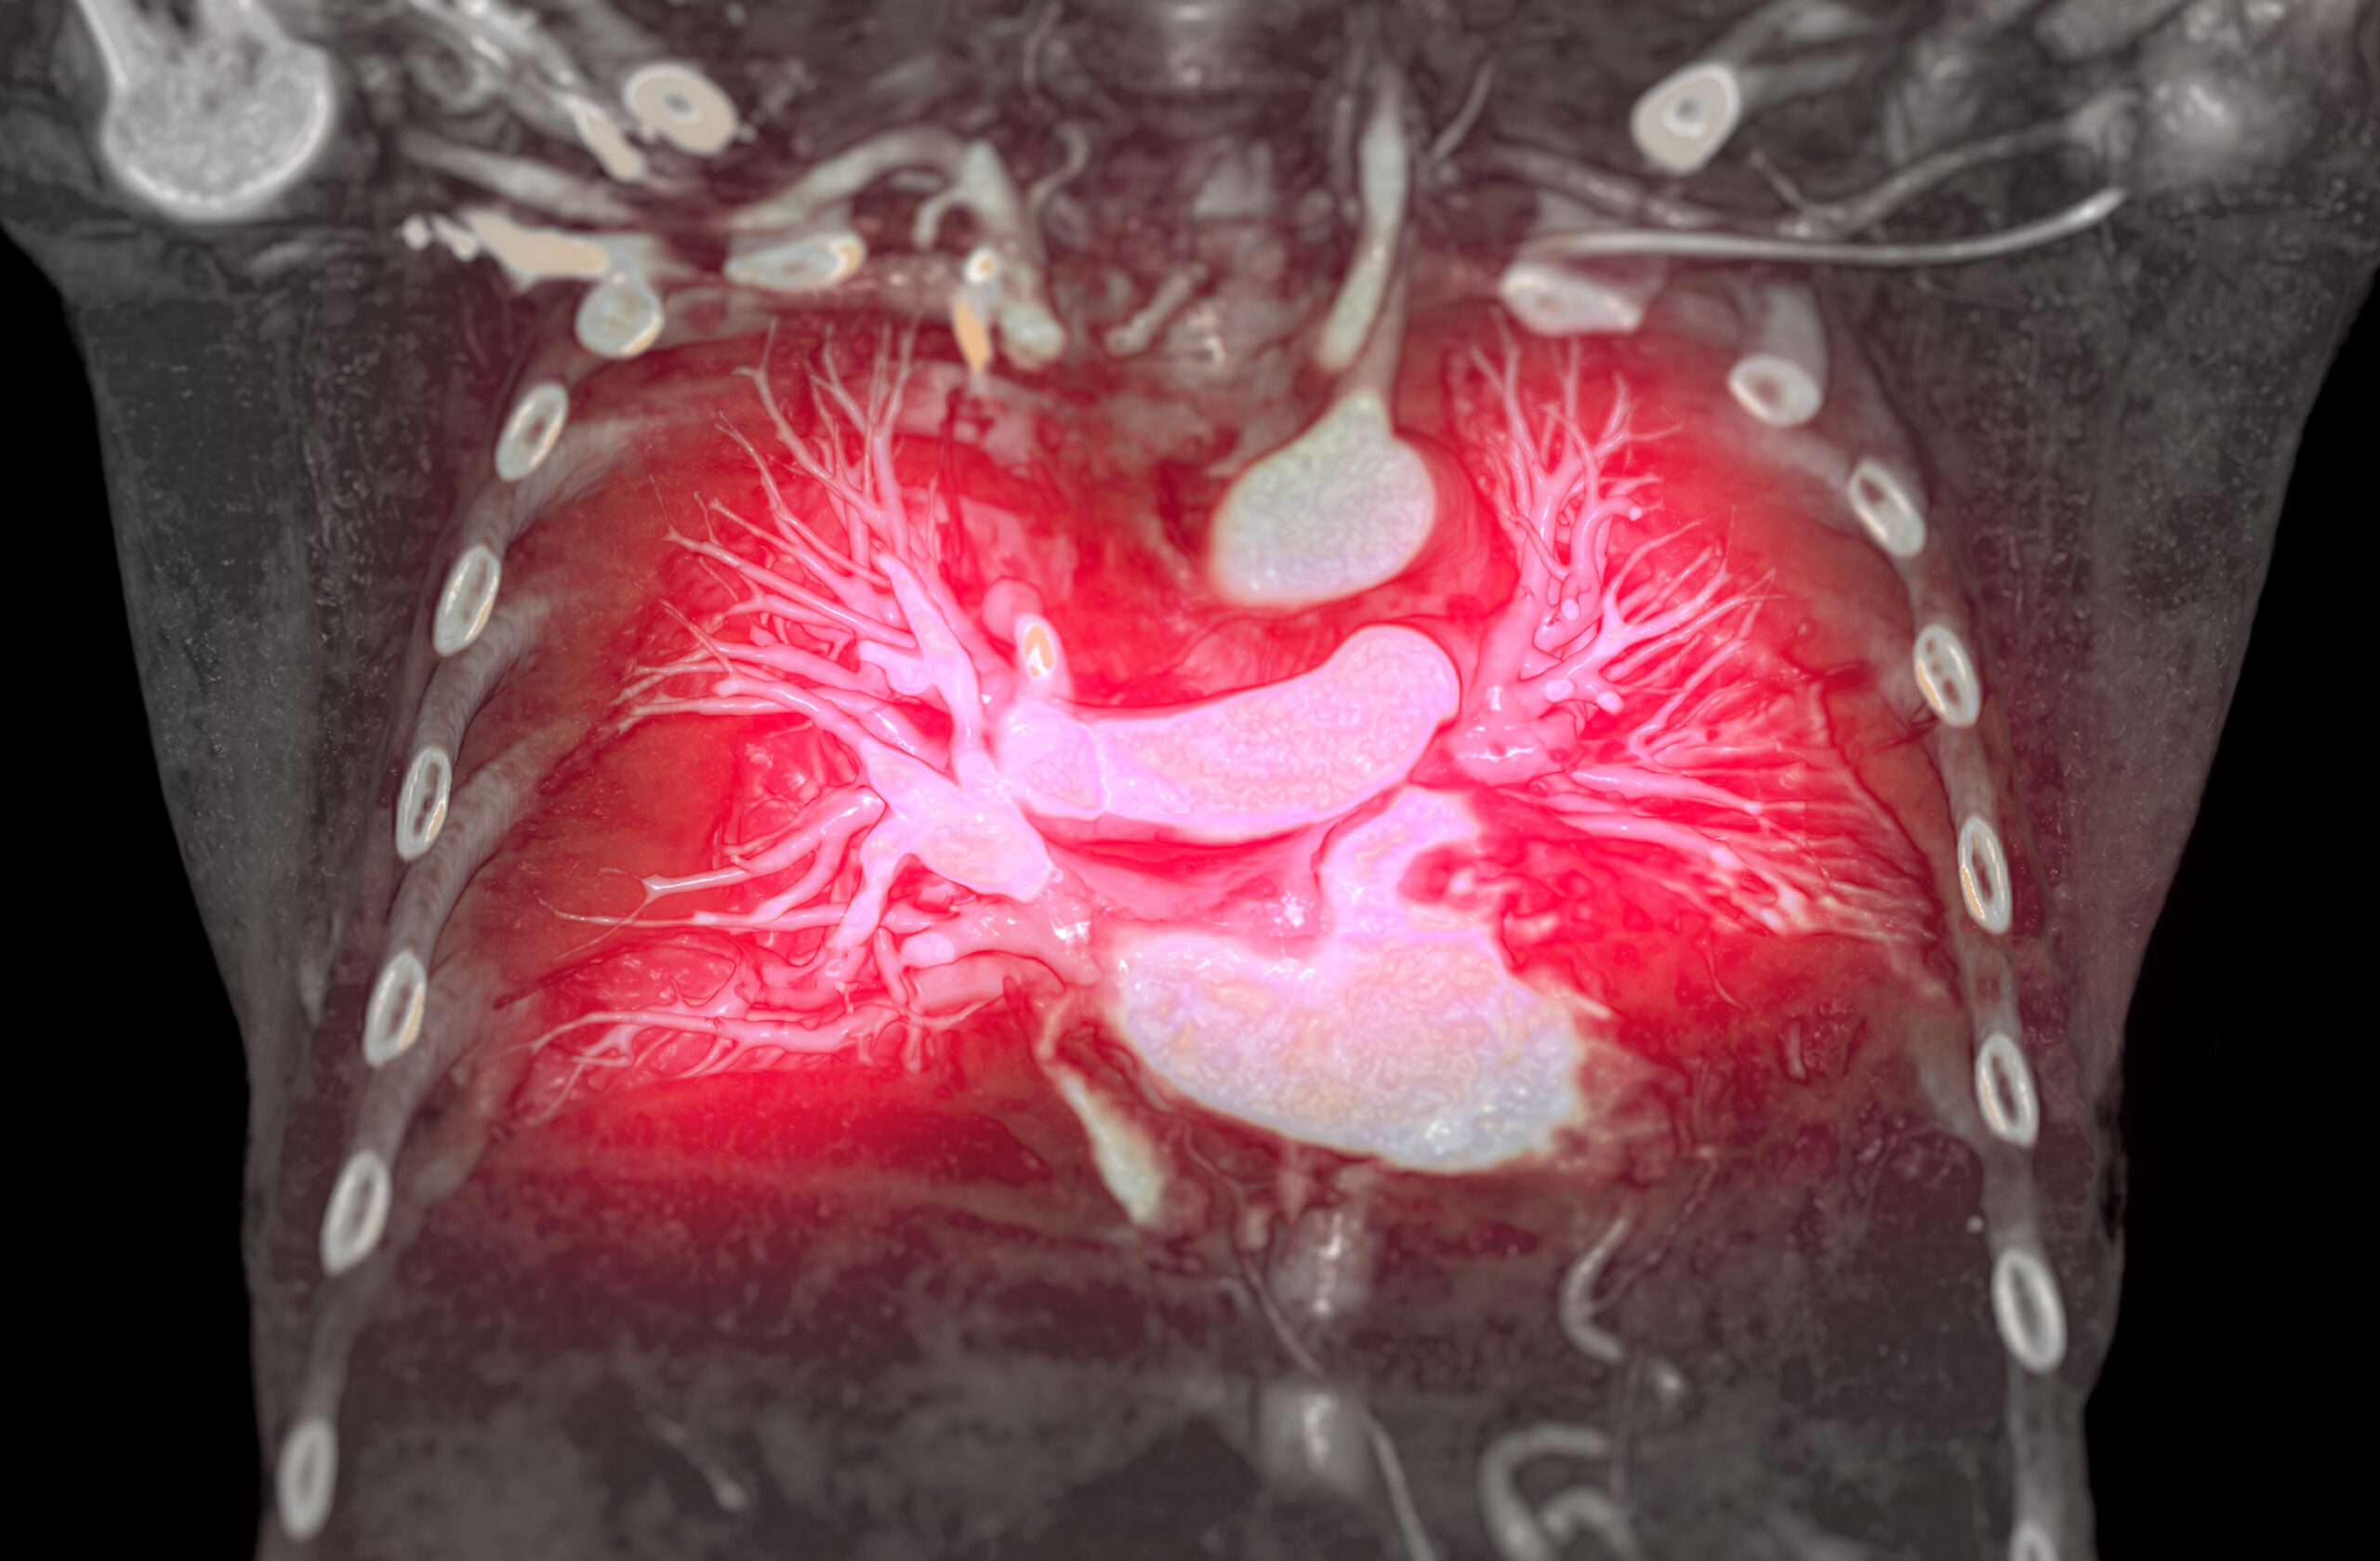 CTA pulmonary arteries 3D rendering showing branch of pulmonary